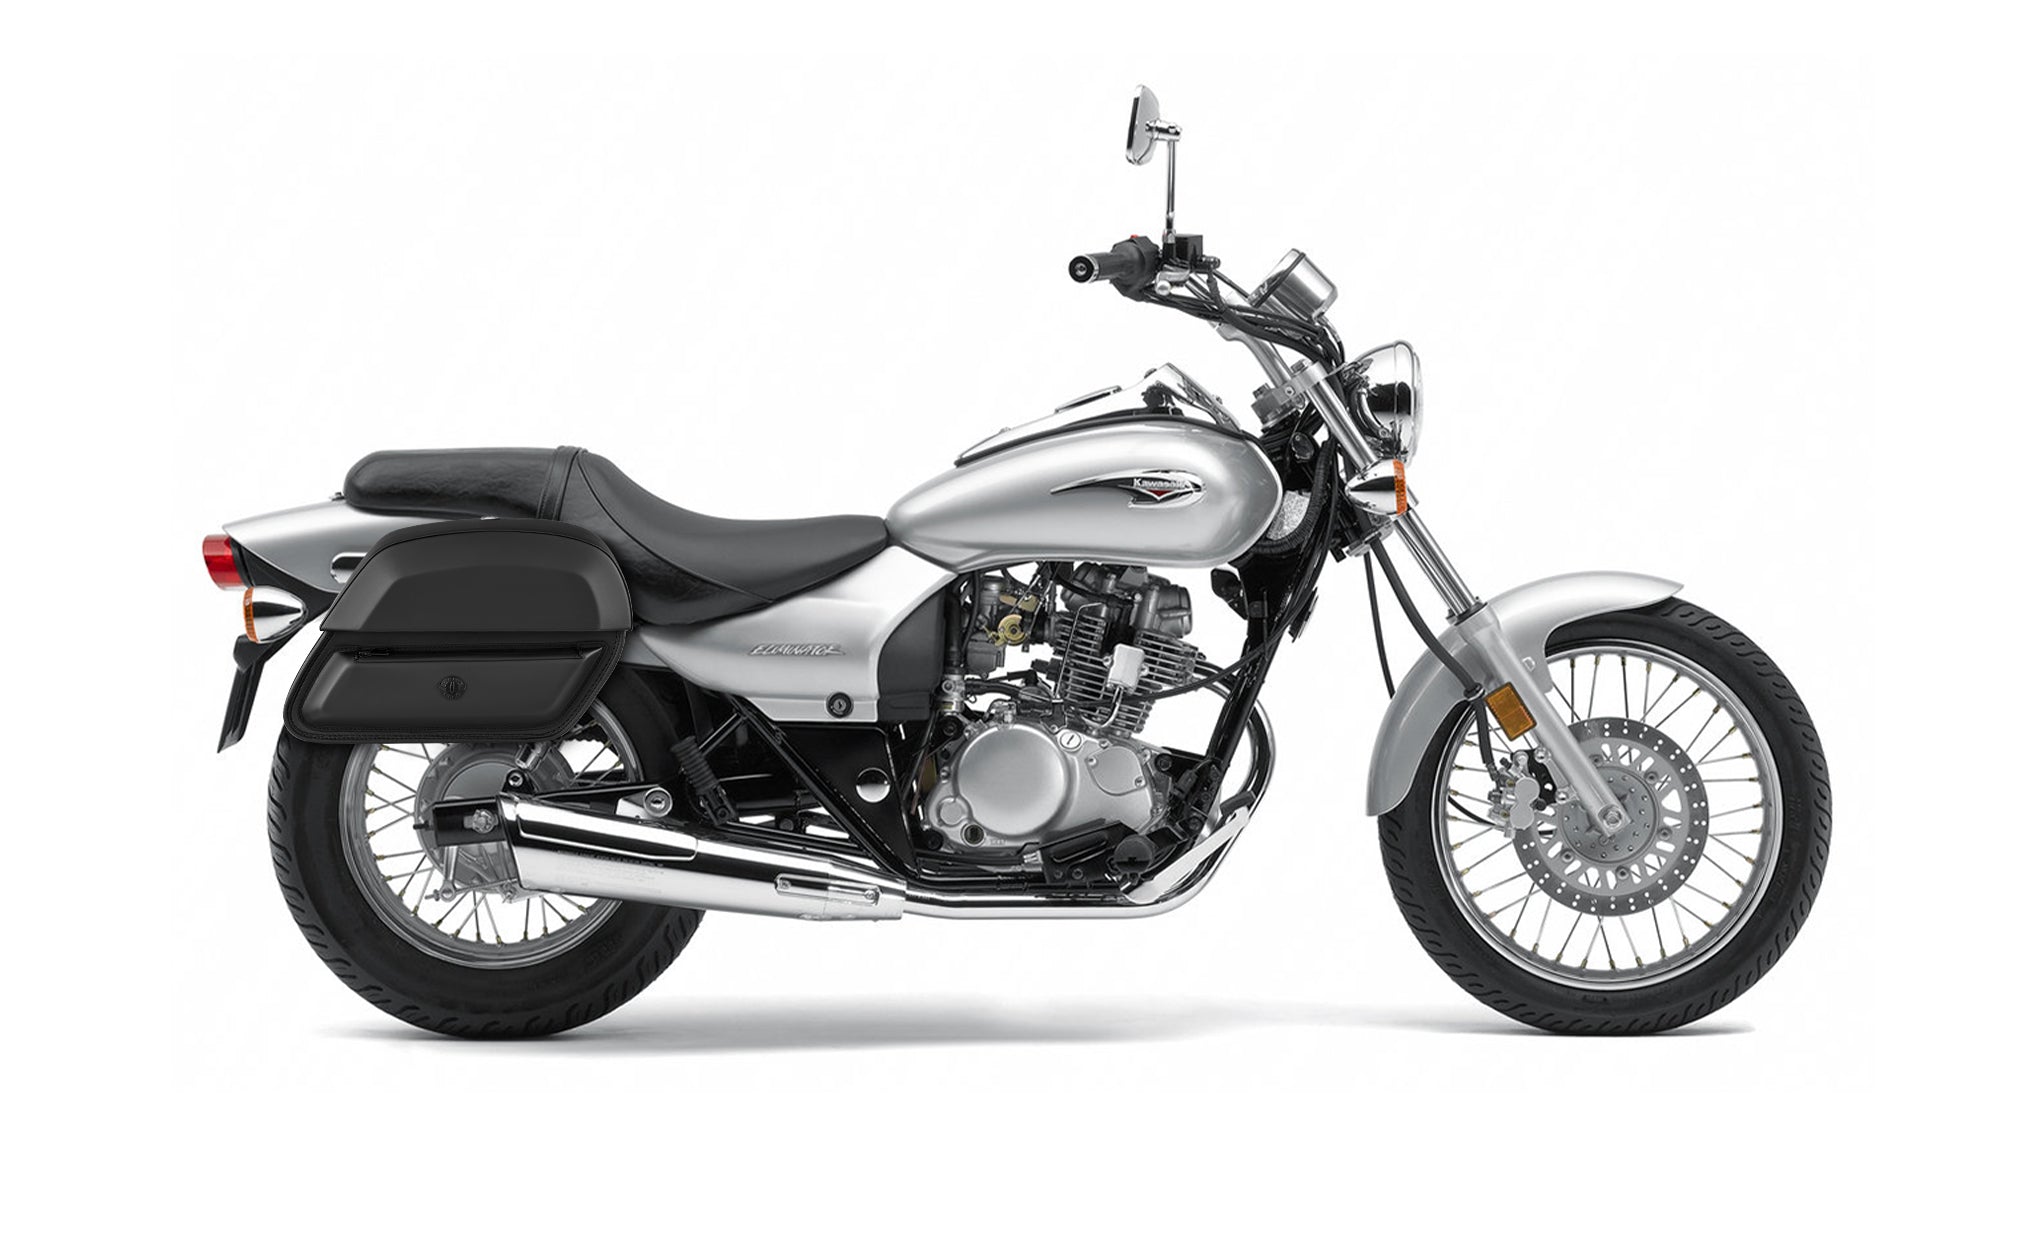 28L - Wraith Medium Eliminator 125 BN125 Leather Motorcycle Saddlebags BAG on Bike View @expand